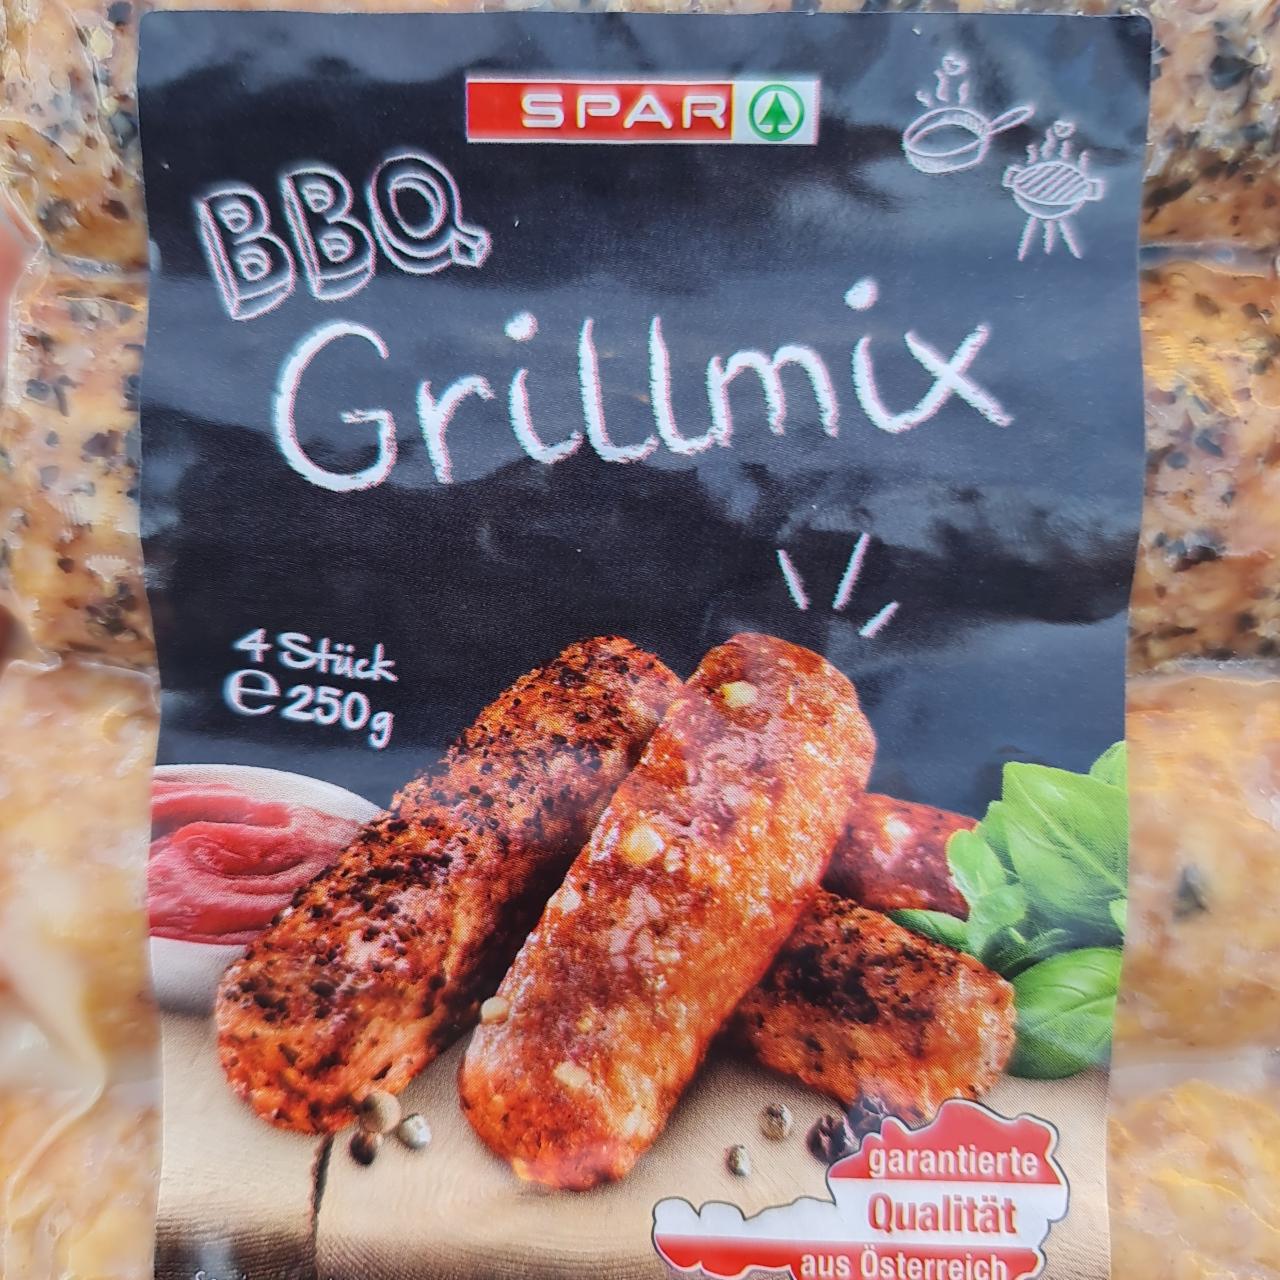 Képek - BBQ grillmix Spar